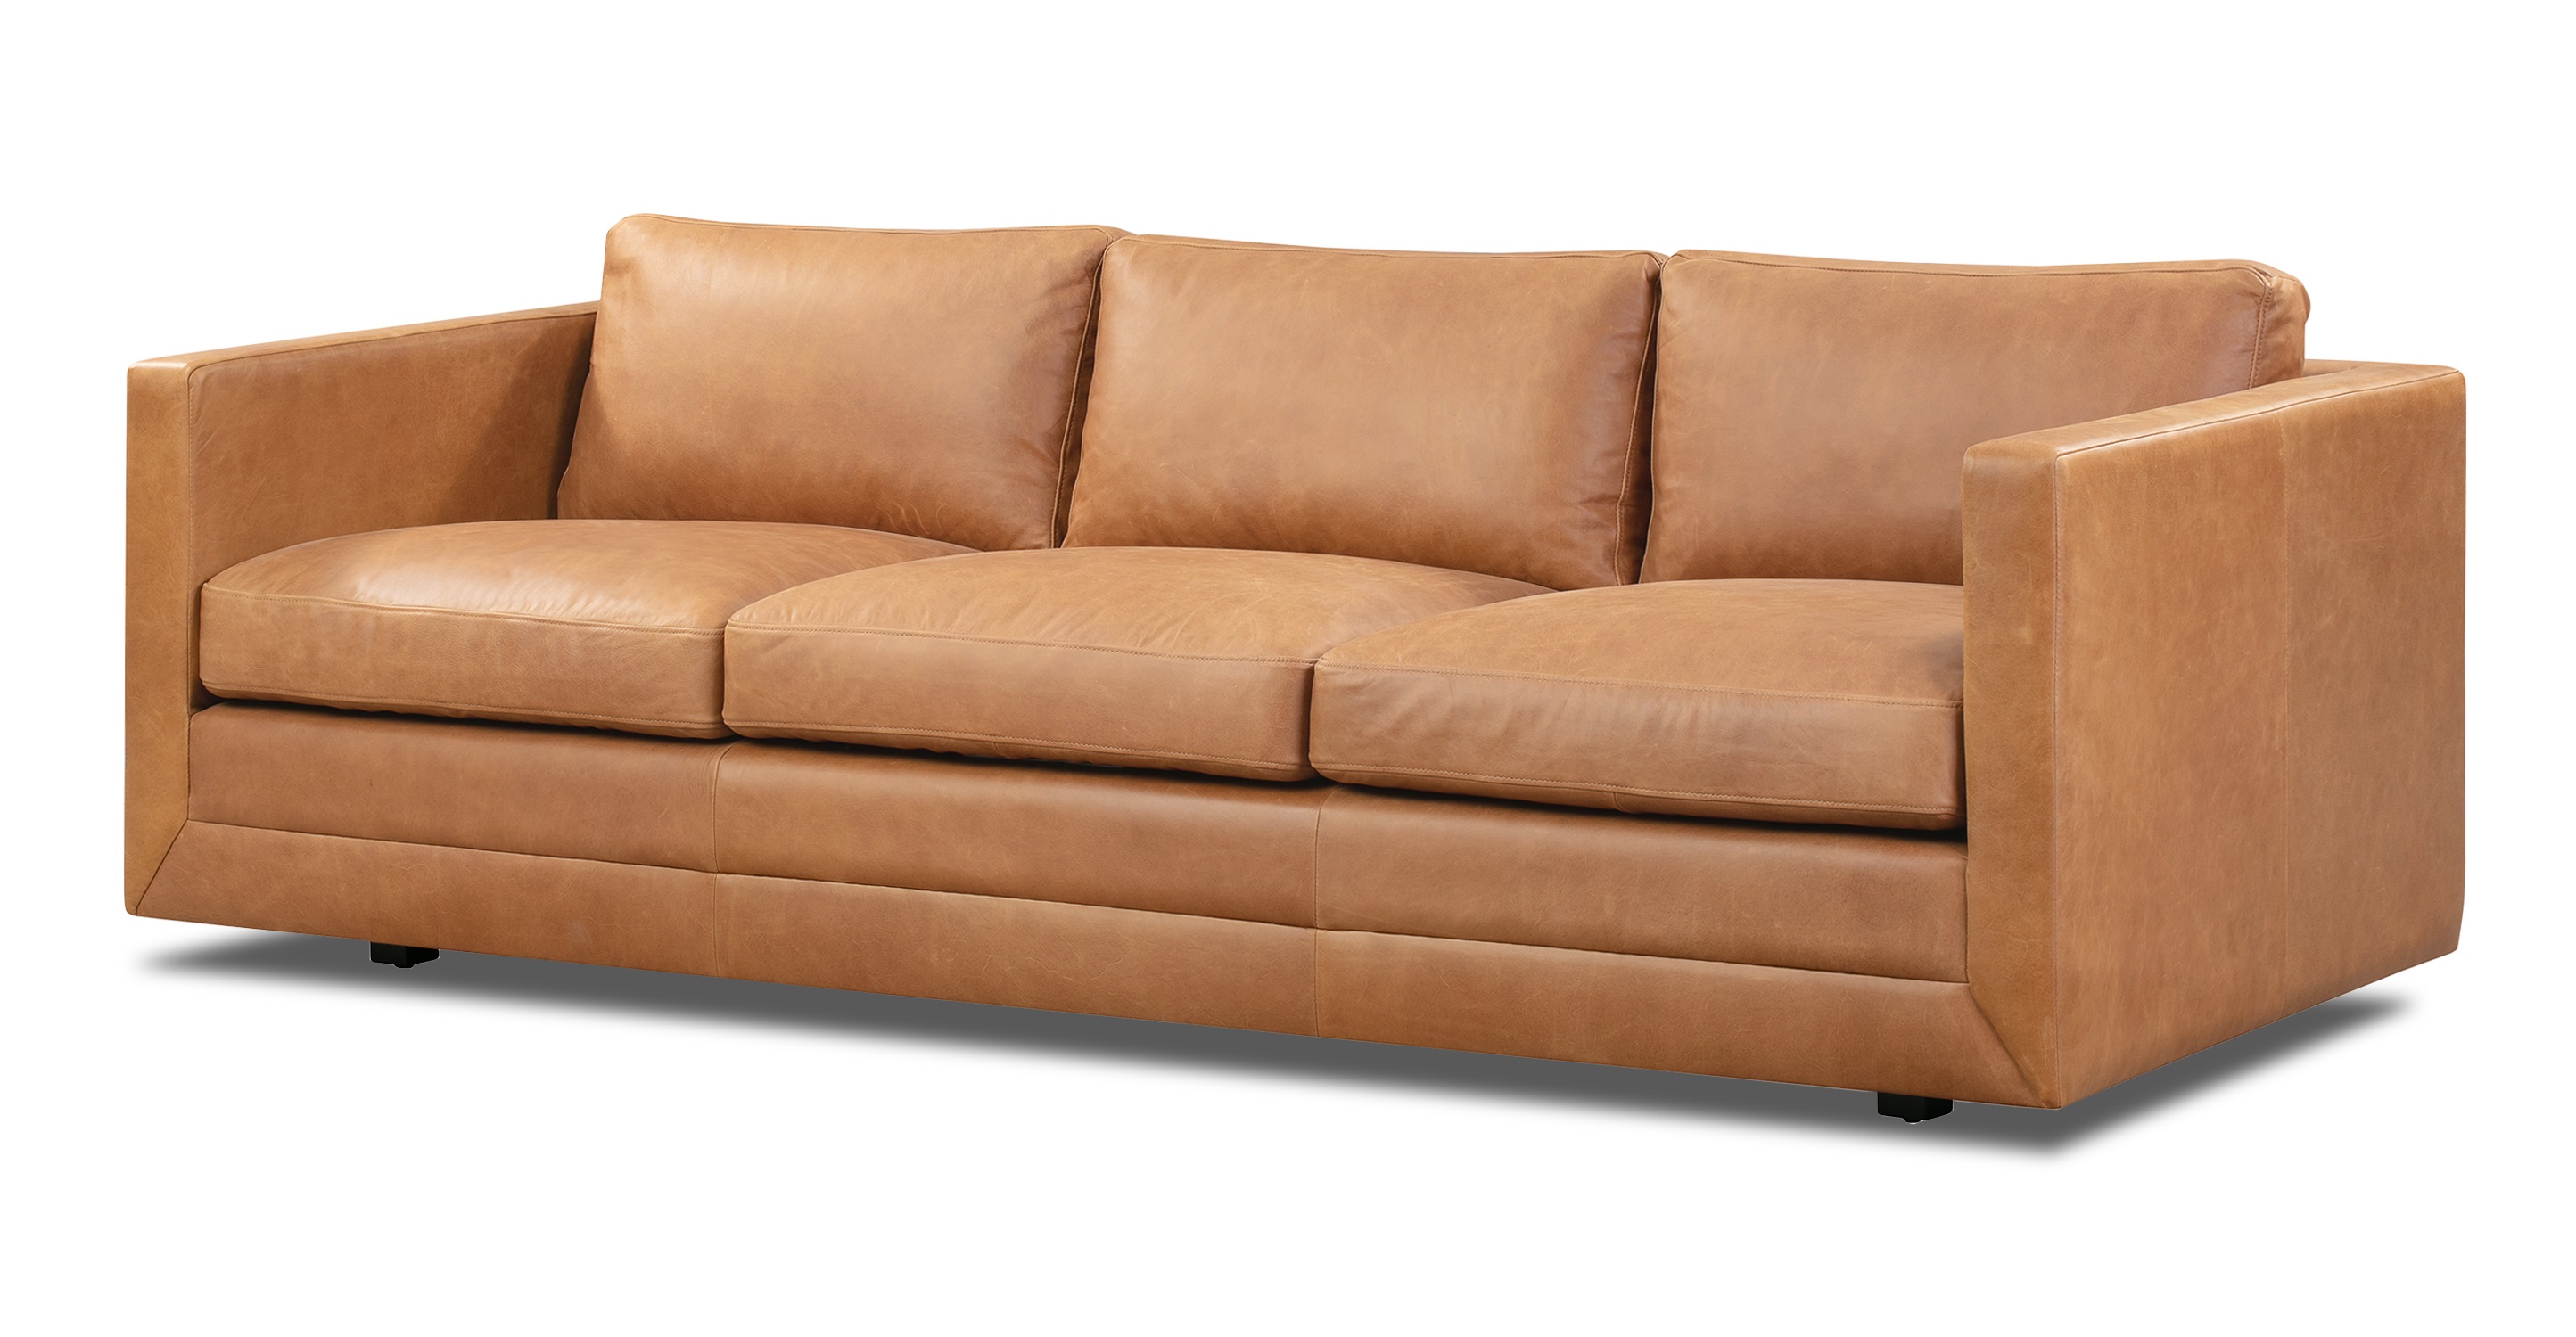 Perrigo 85 Top Grain Italian Leather Match Sofa with 2 Accent Pillows